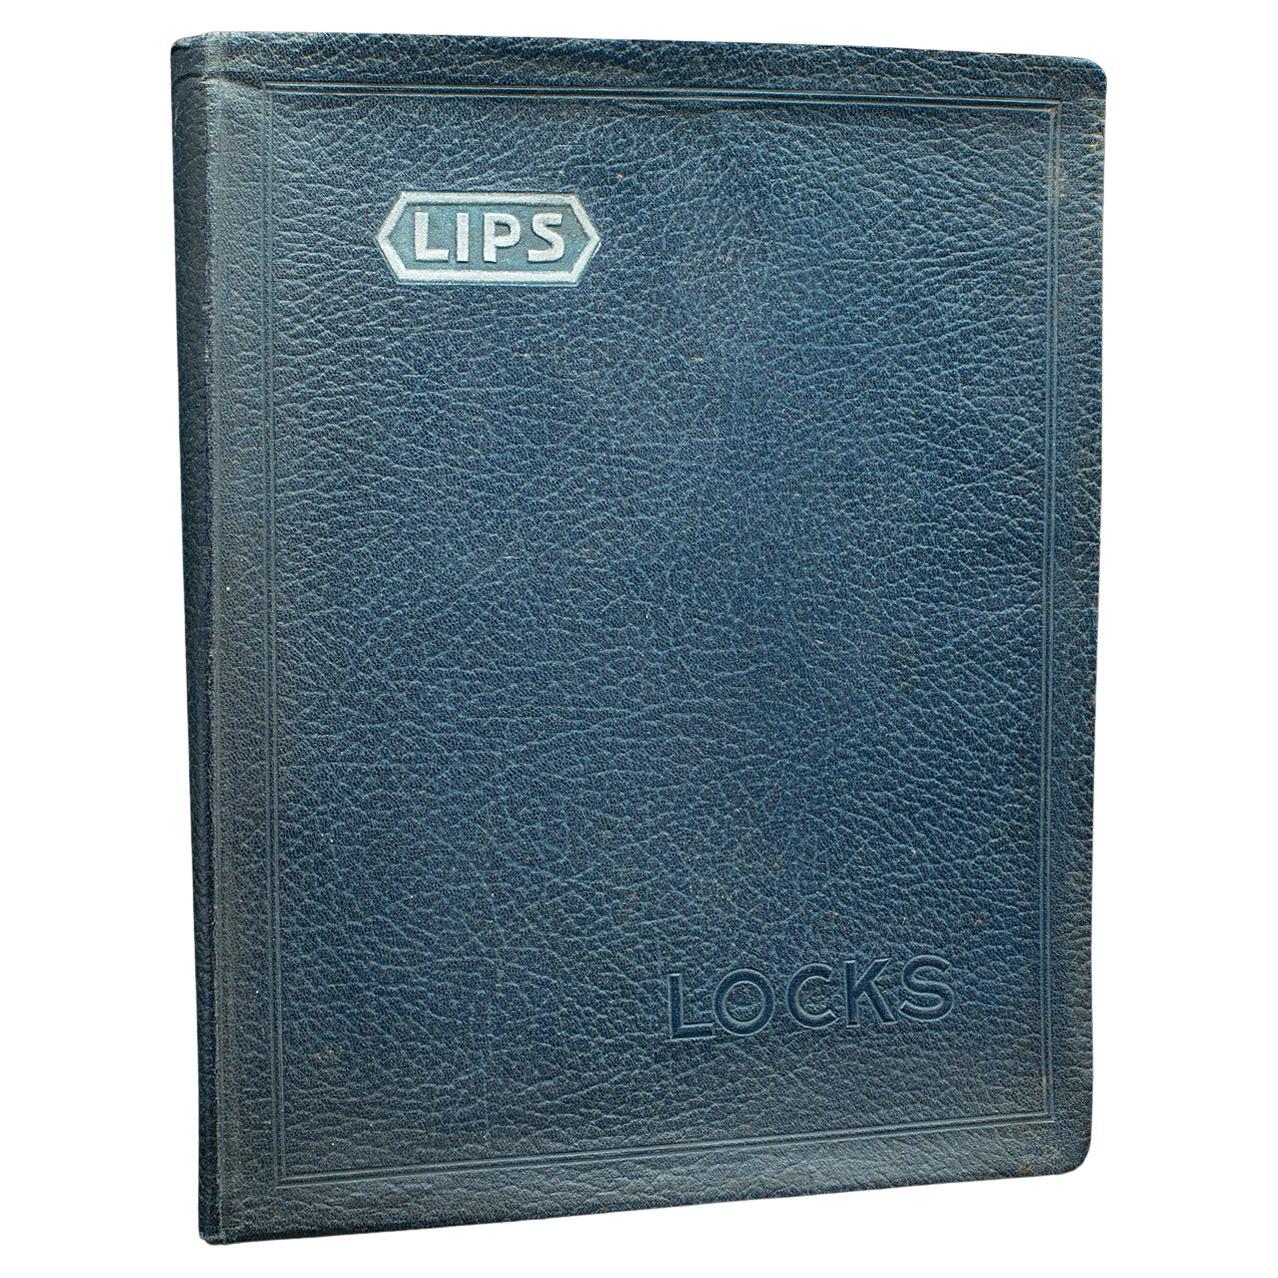 Vintage Lips Locks Trade Catalogue, English, Folio, Nicholls and Clarke, C.1935